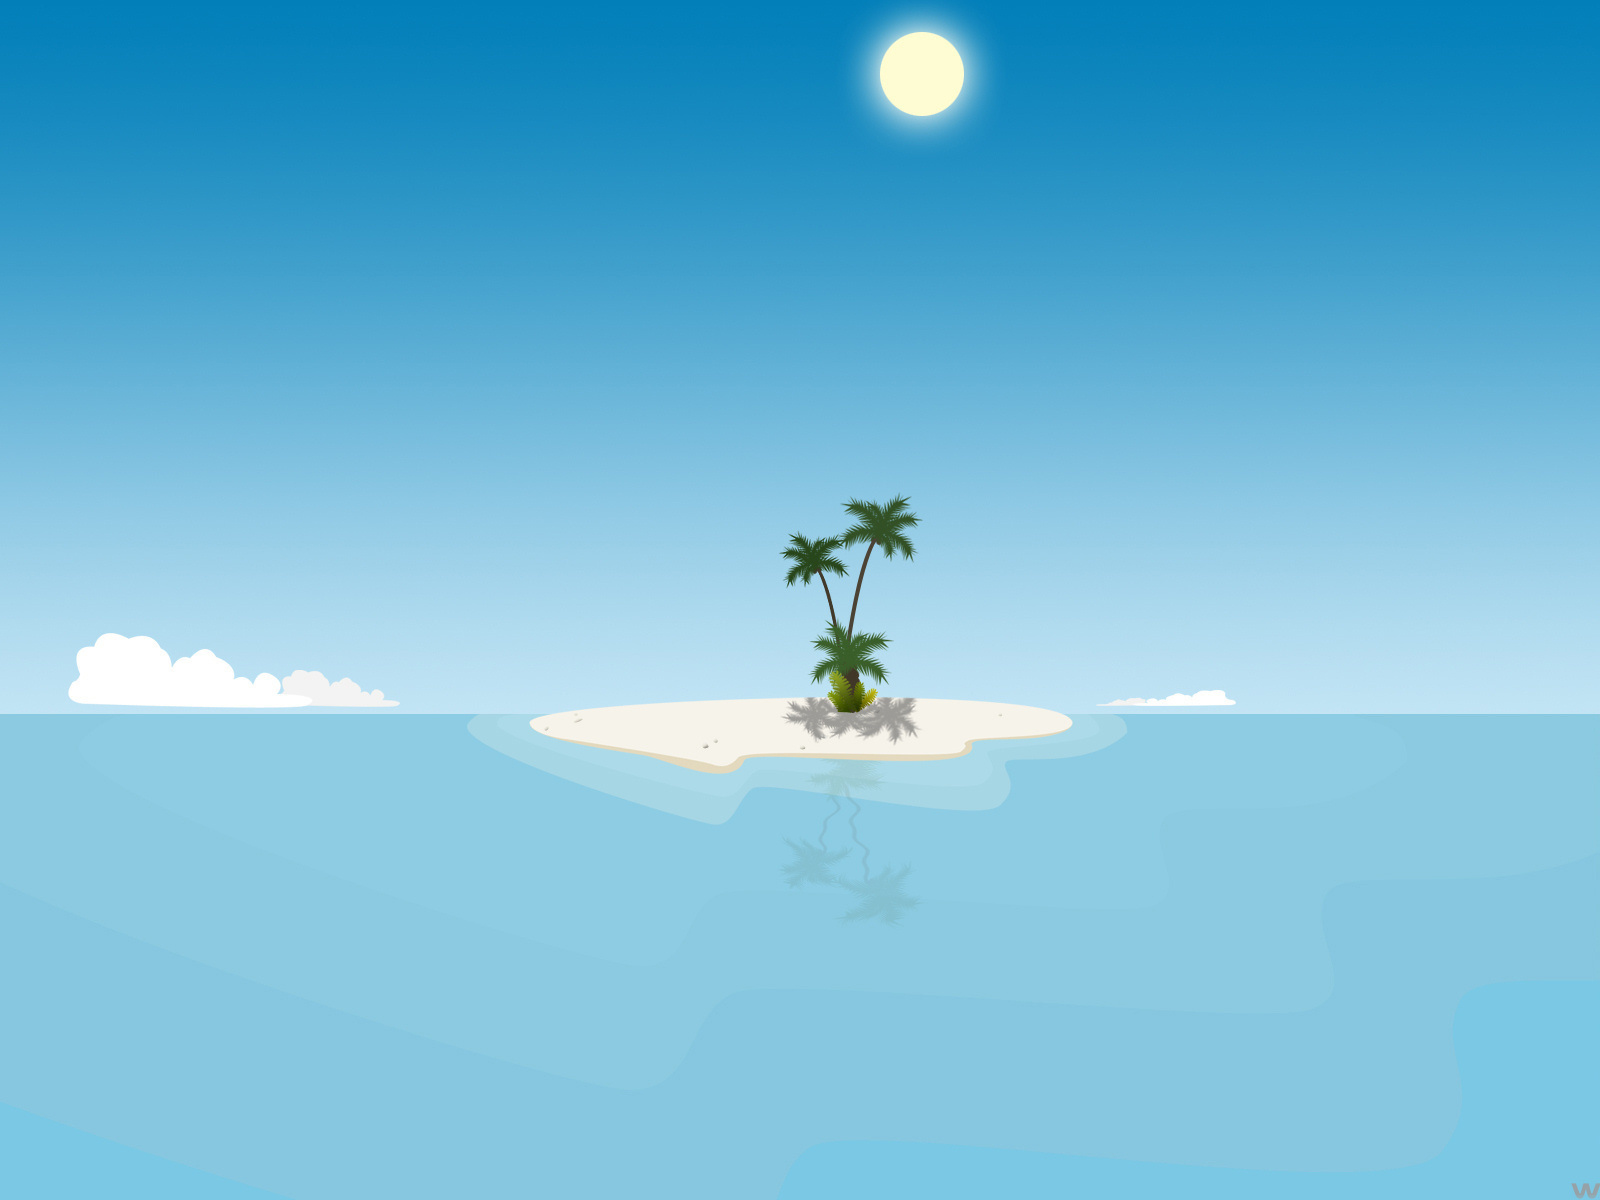 Desert island in the blue sea